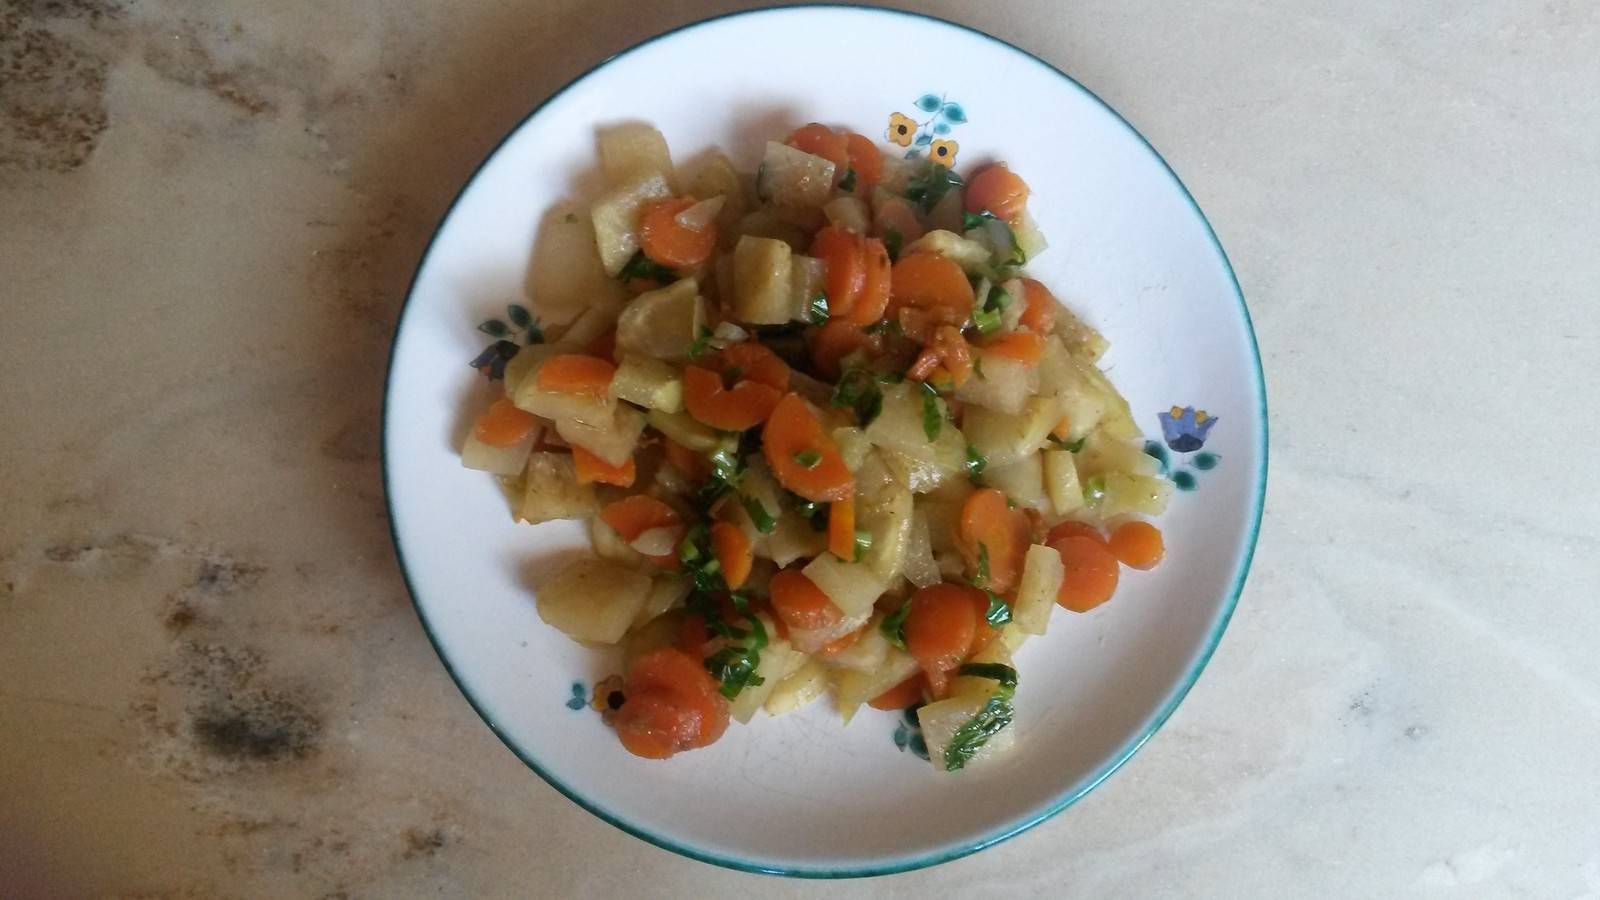 Karotten-Kohlrabigemüse